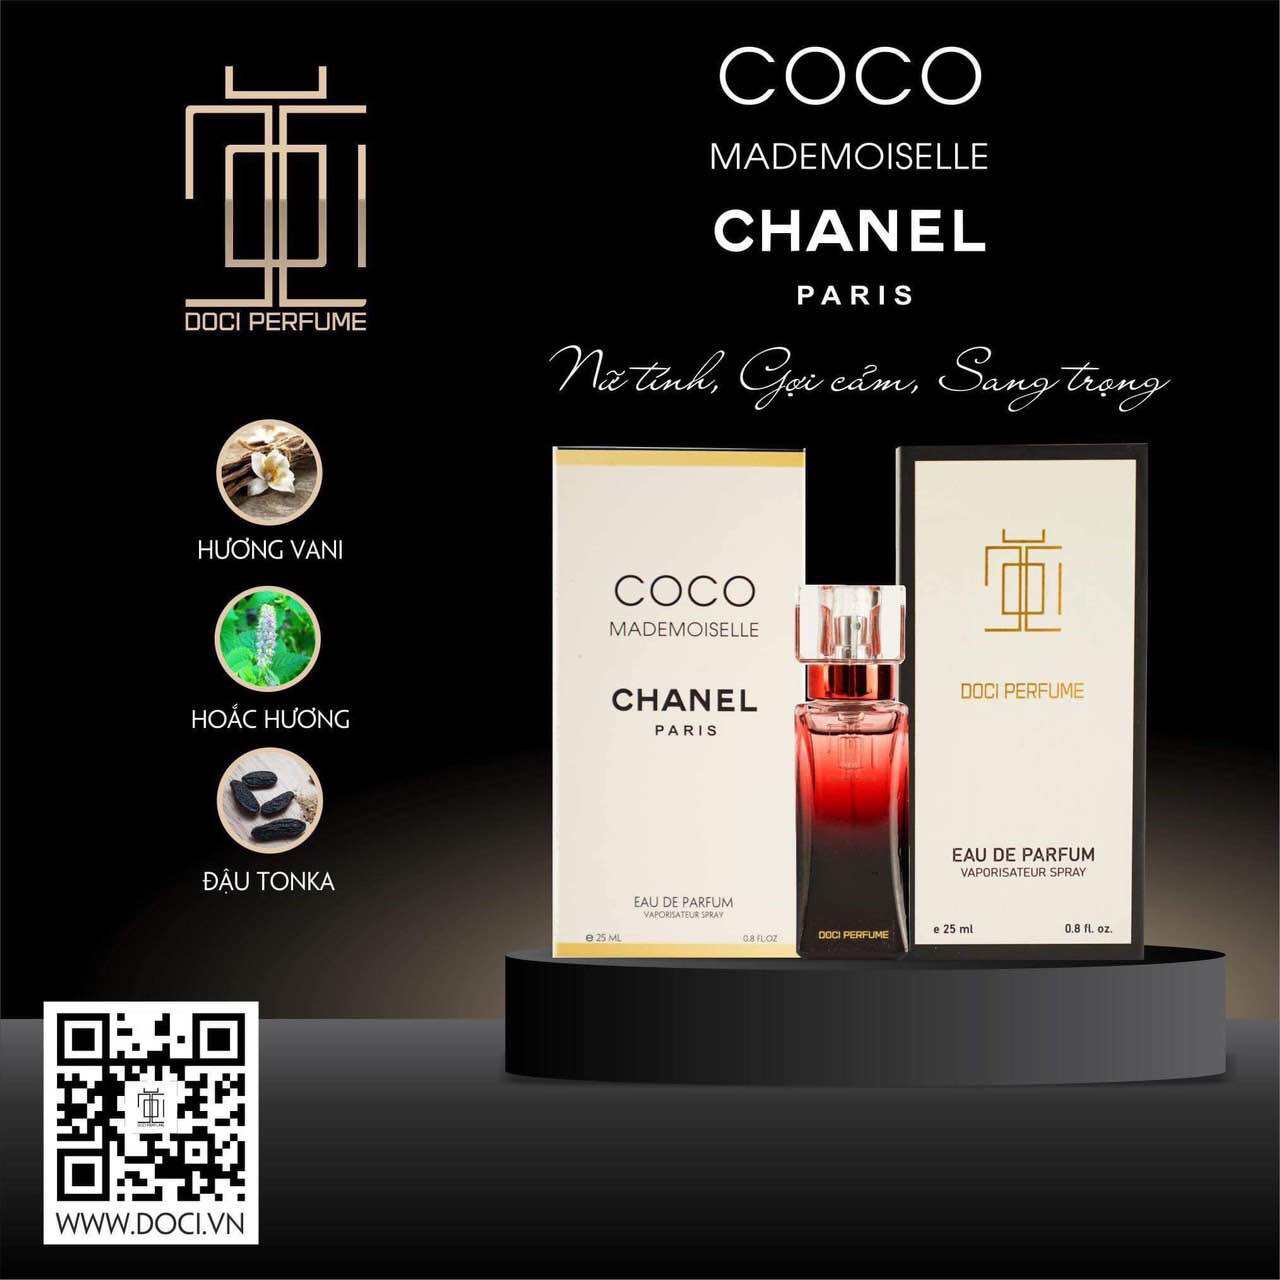 Nước Hoa Chanel Coco Mademoiselle Set 3 Ống Giá 250K